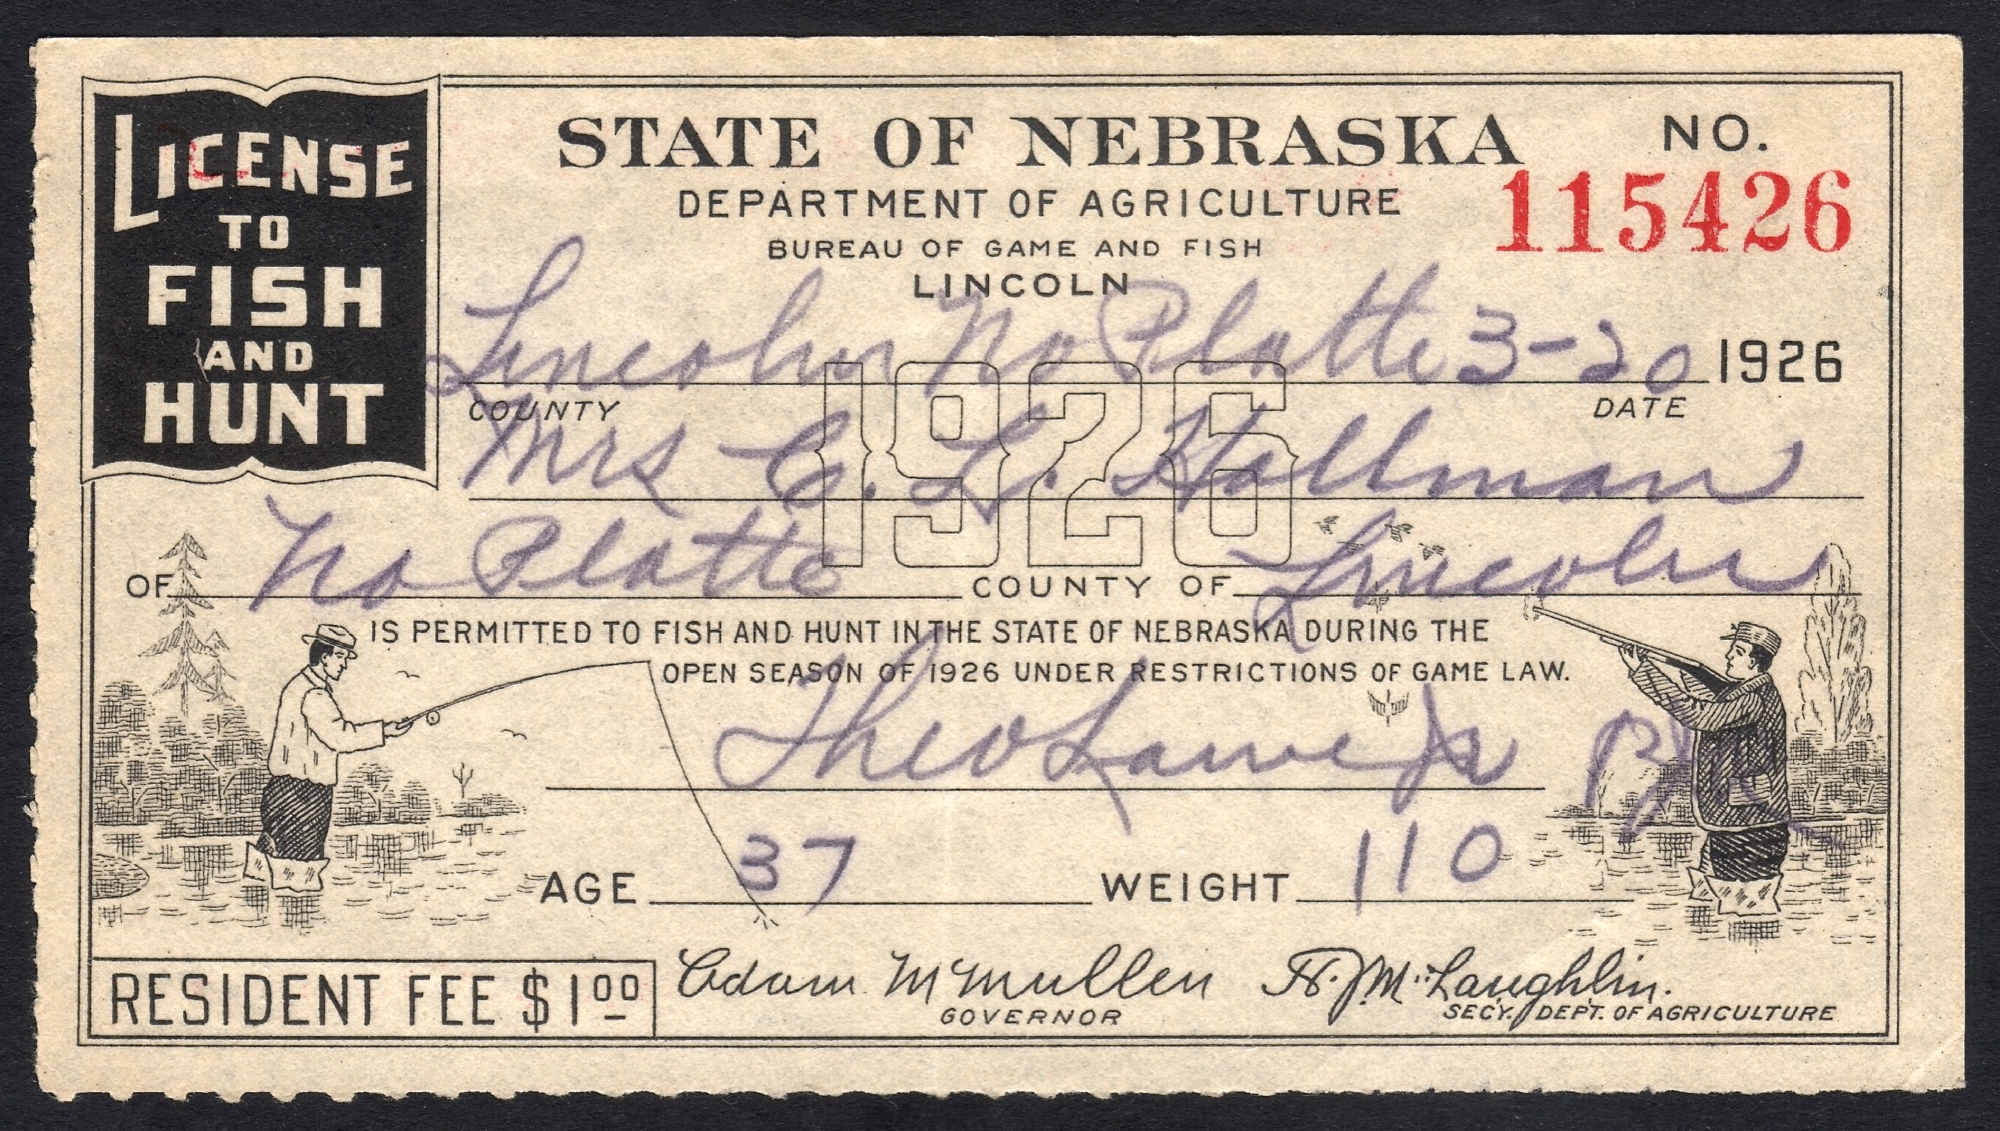 Nebraska 1926 License to Fish and Hunt